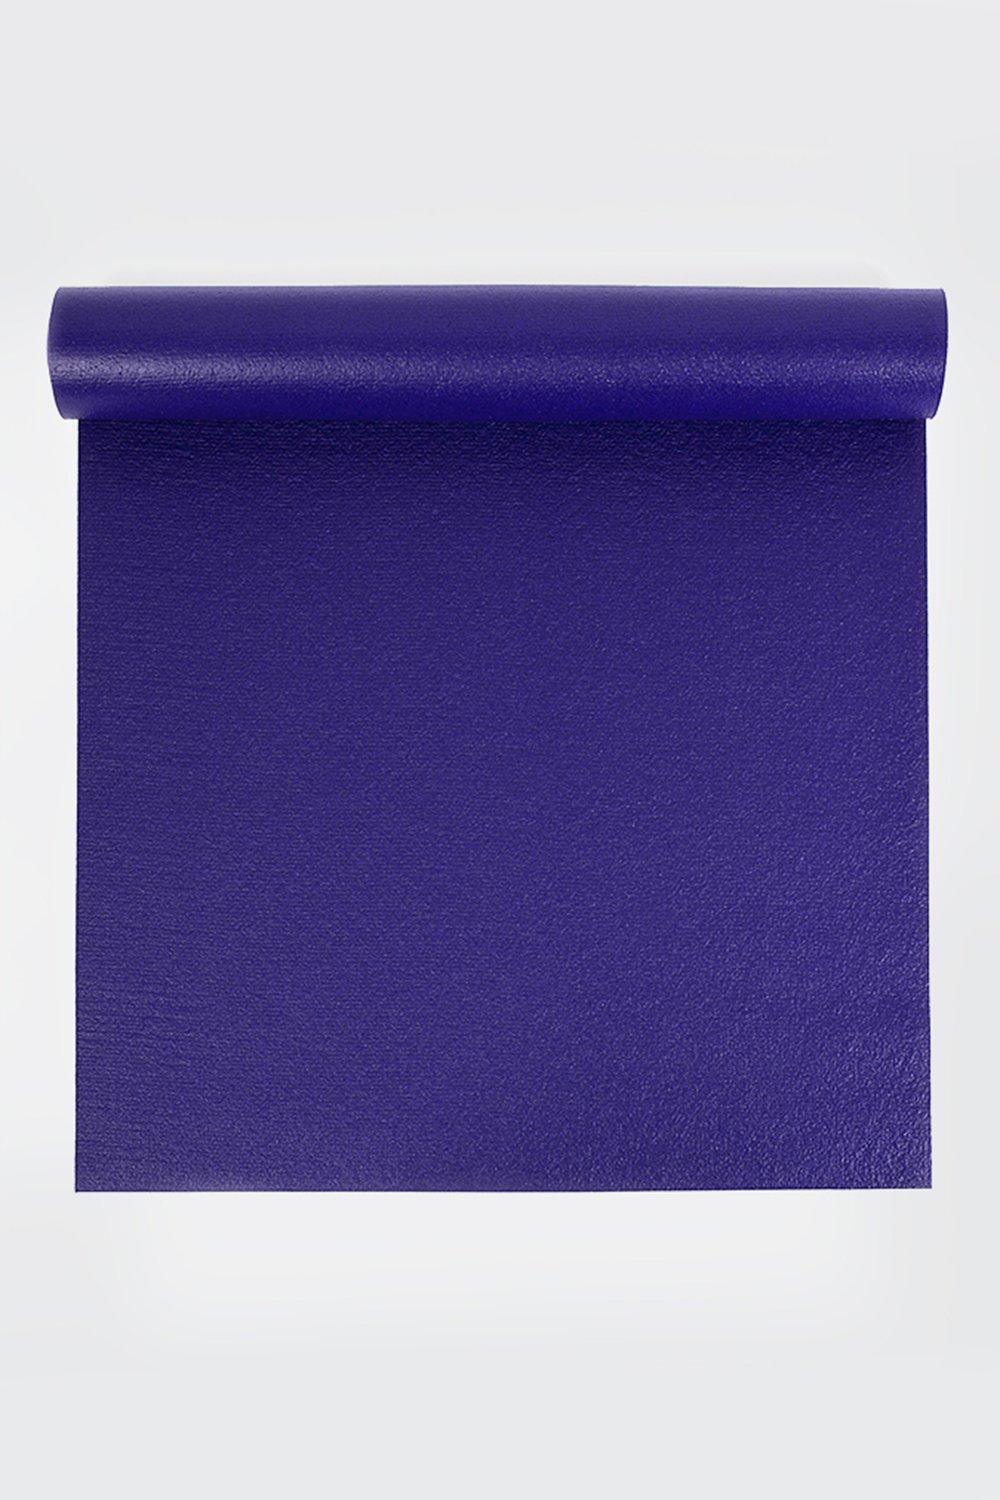 Yoga Studio Oeko-Tex Original Sticky Yoga Mat 4.5mm|purple